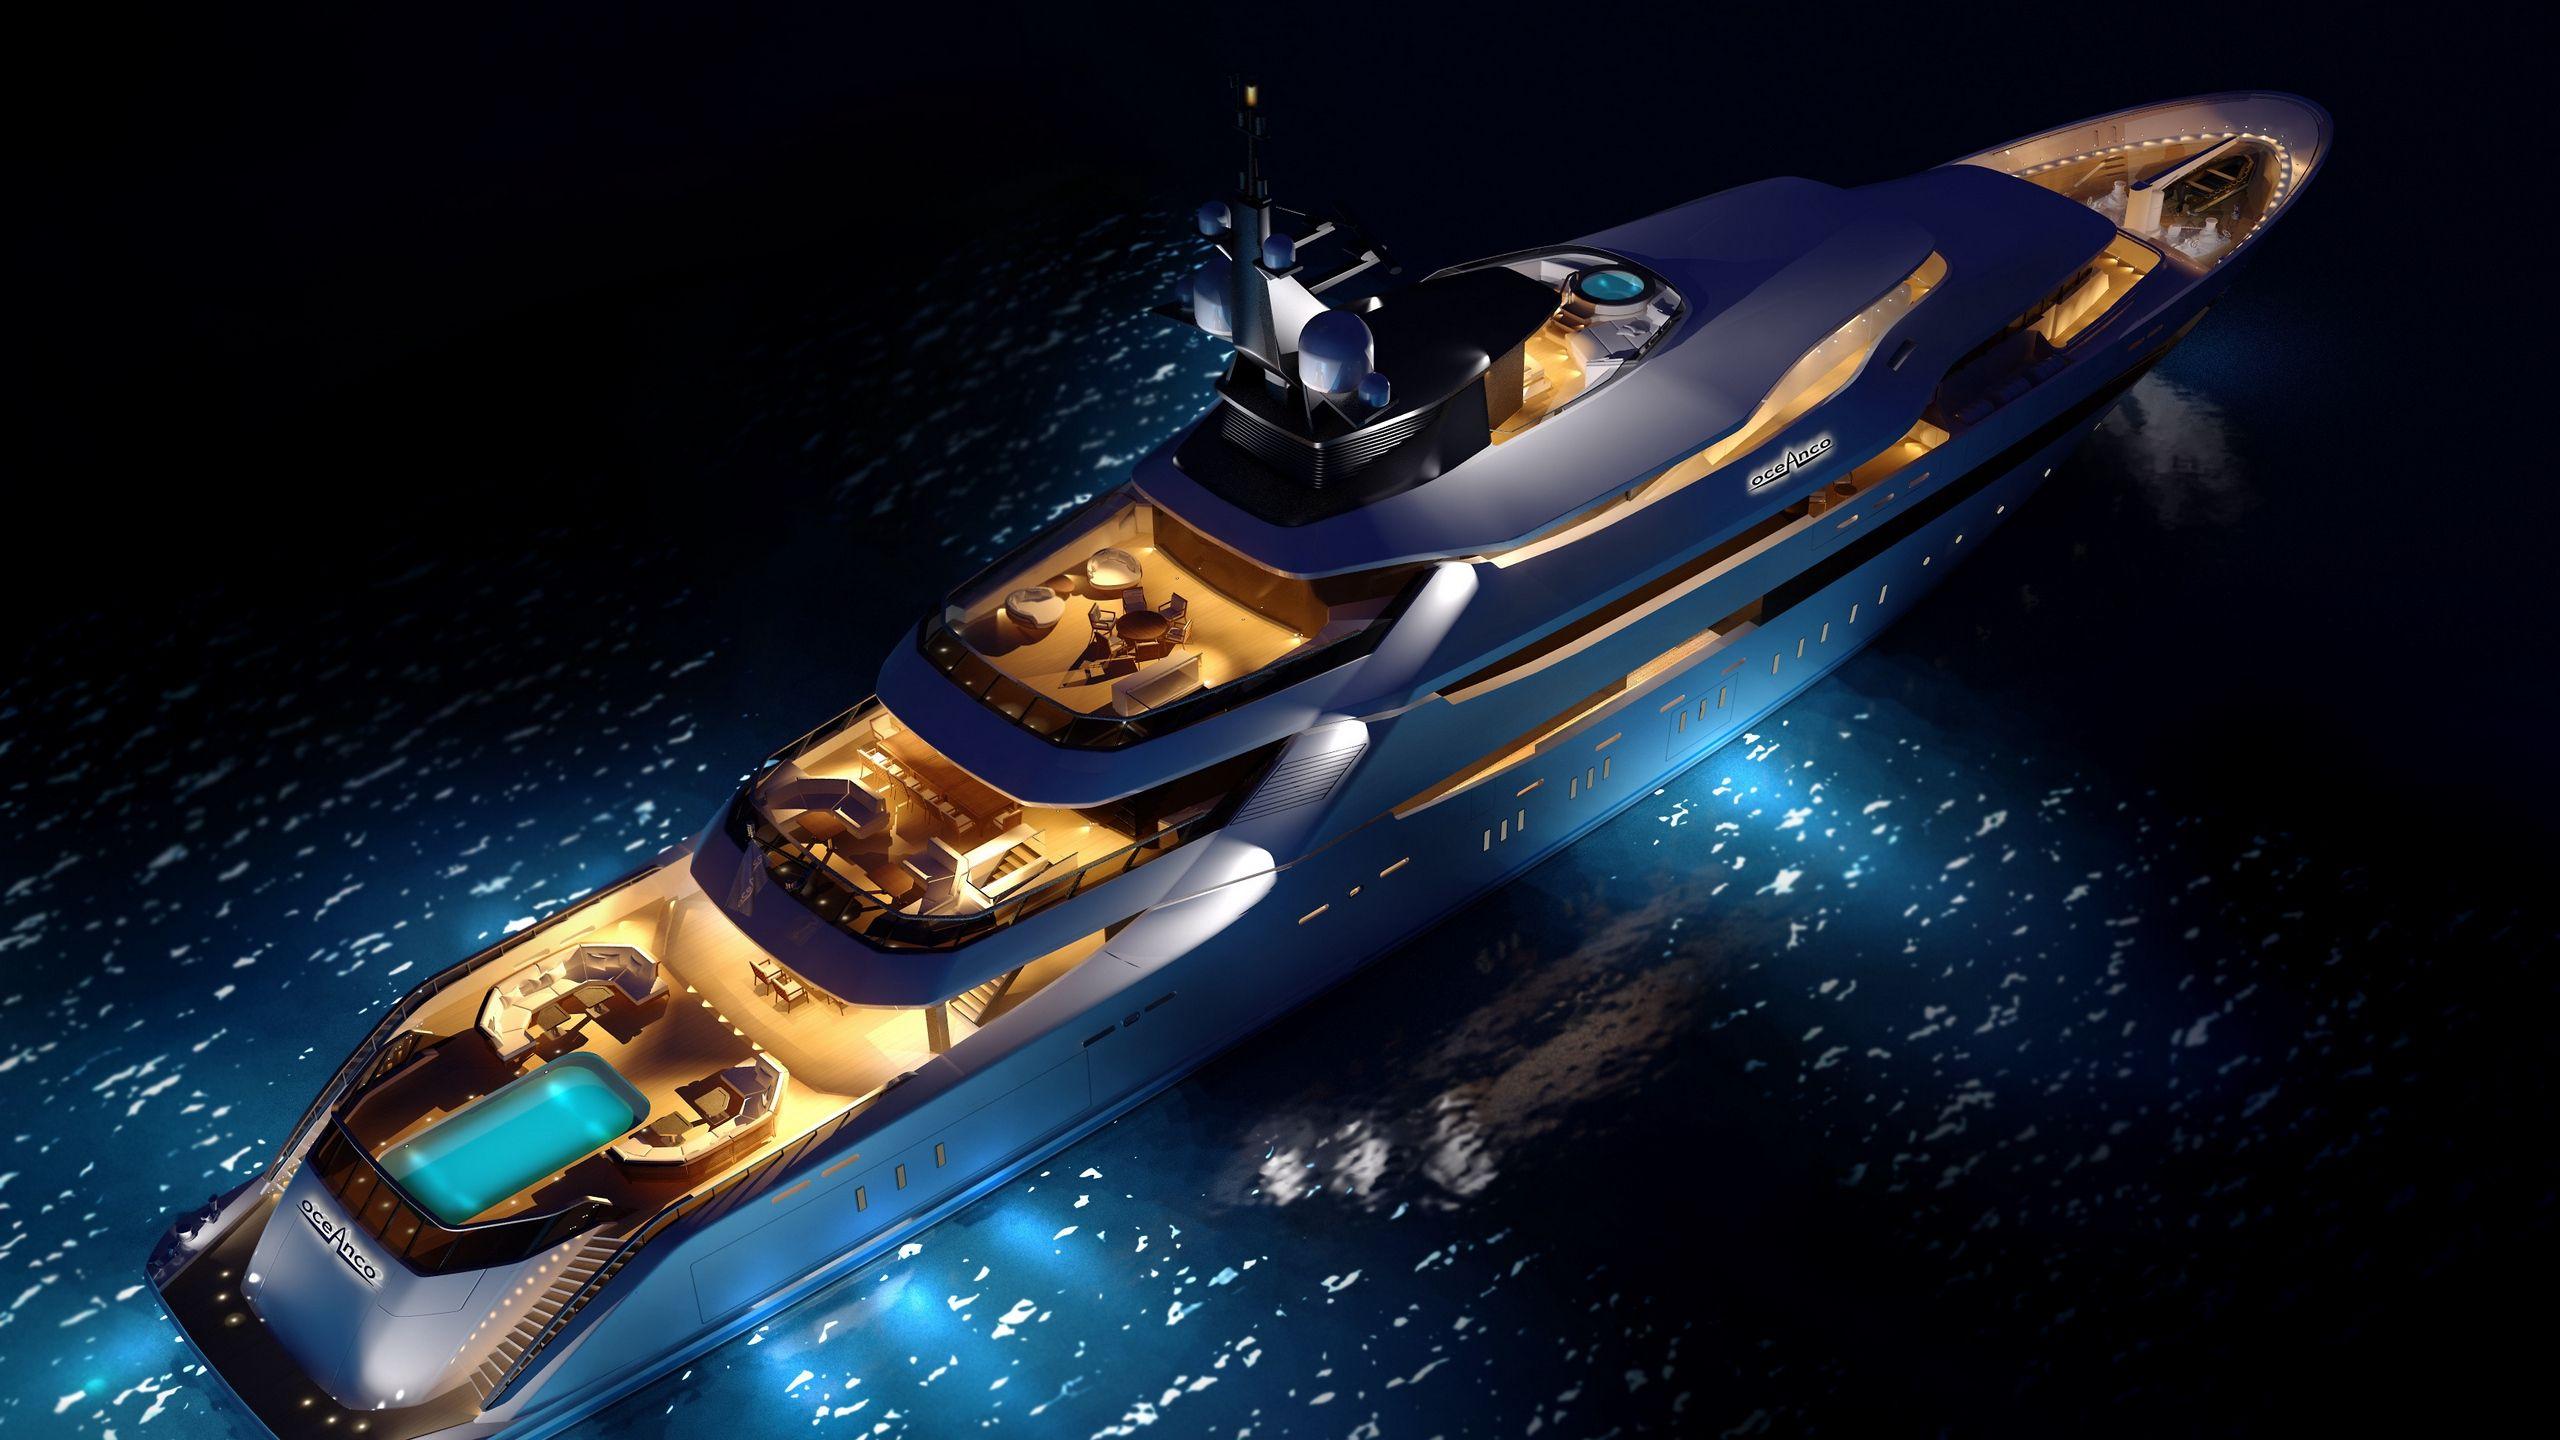 Download wallpaper 2560x1440 yacht, concept, luxury widescreen 16:9